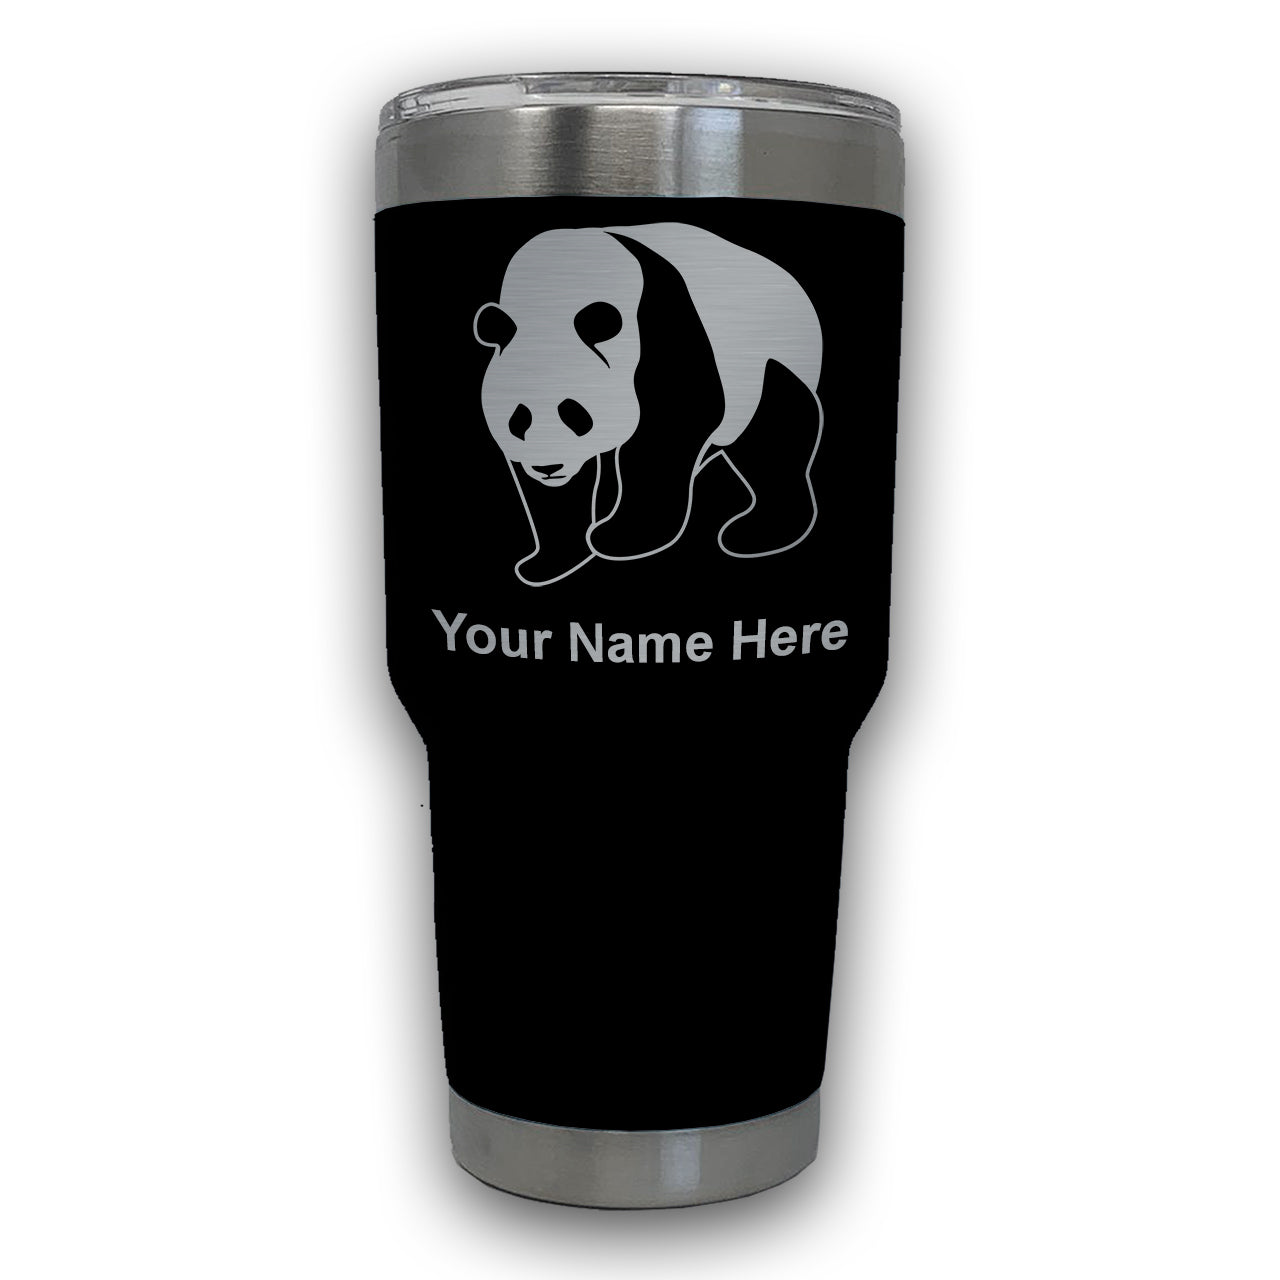 LaserGram 30oz Tumbler Mug, Panda Bear, Personalized Engraving Included